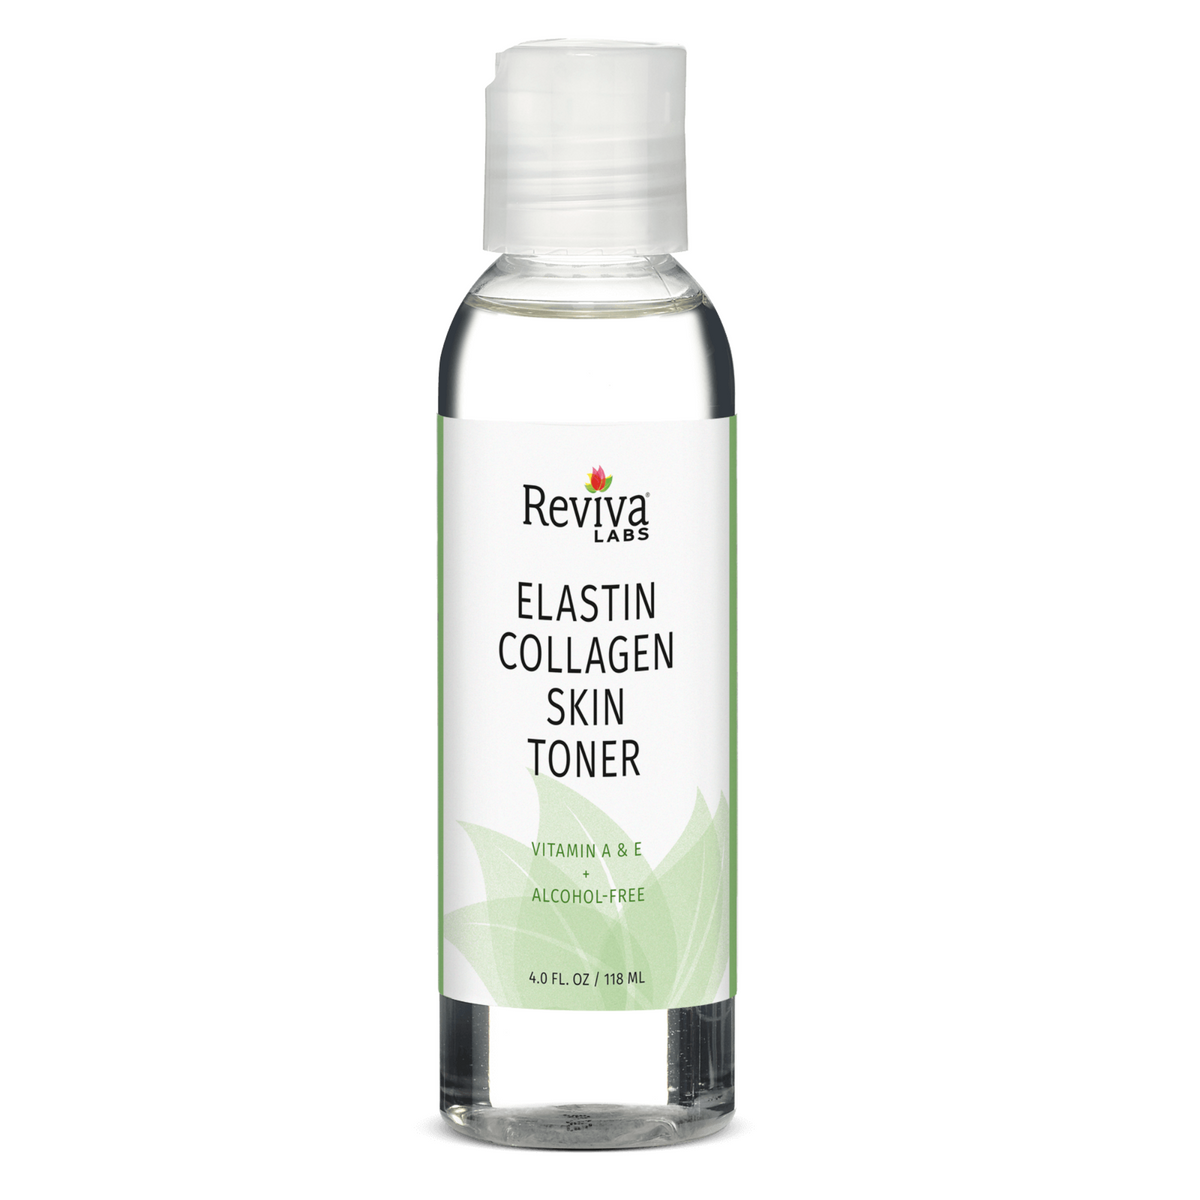 Primary Image of Elastin Collagen Skin Toner